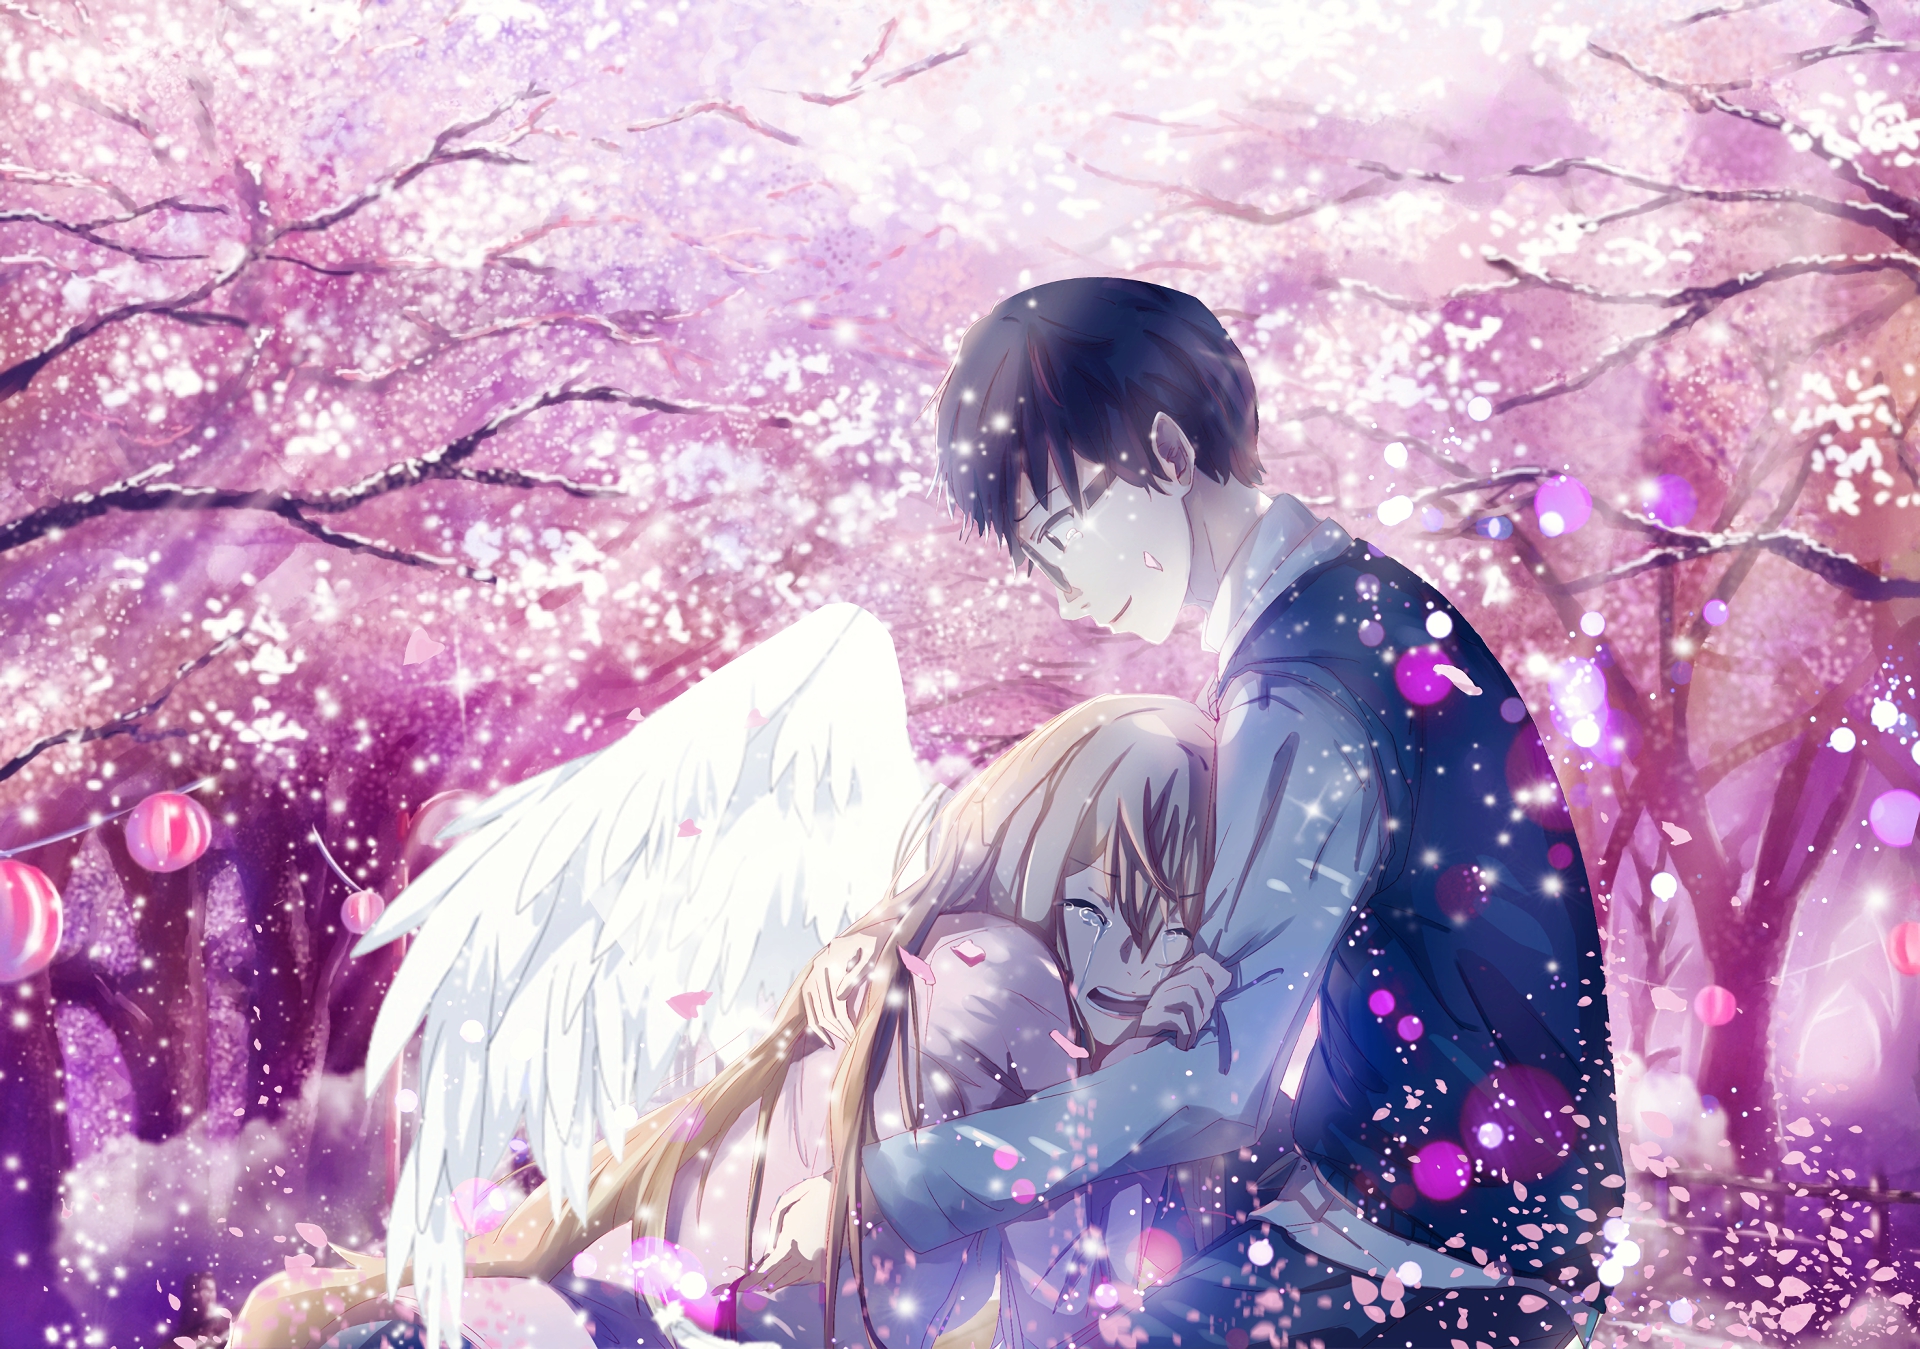 Tumblr: @April-Edits  Anime wallpaper, Cute anime wallpaper, Love  animation wallpaper